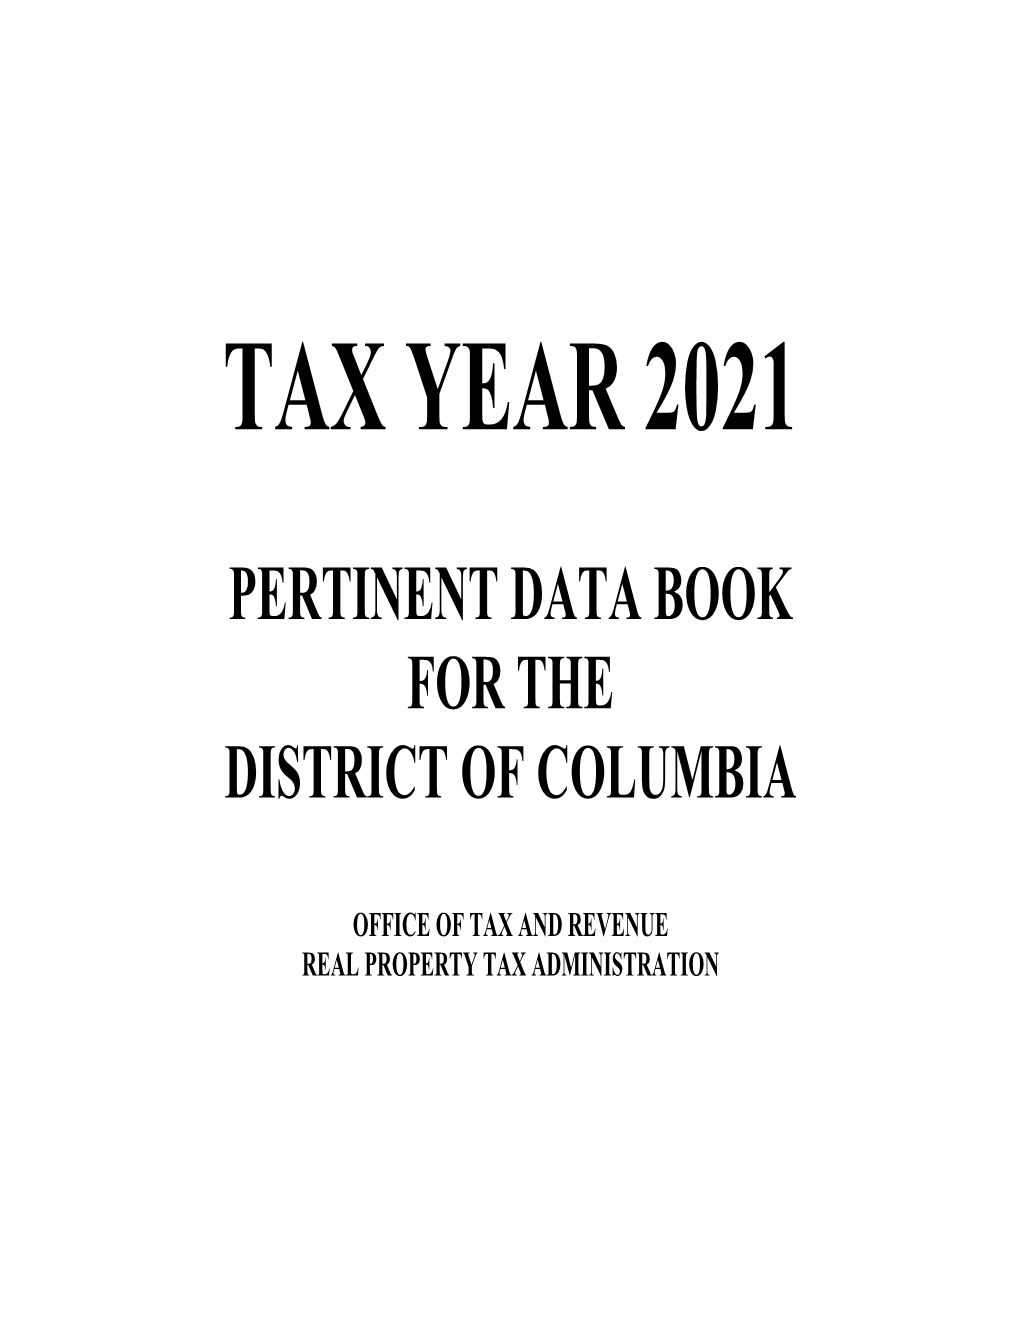 TY 2021 Pertinent Data Book